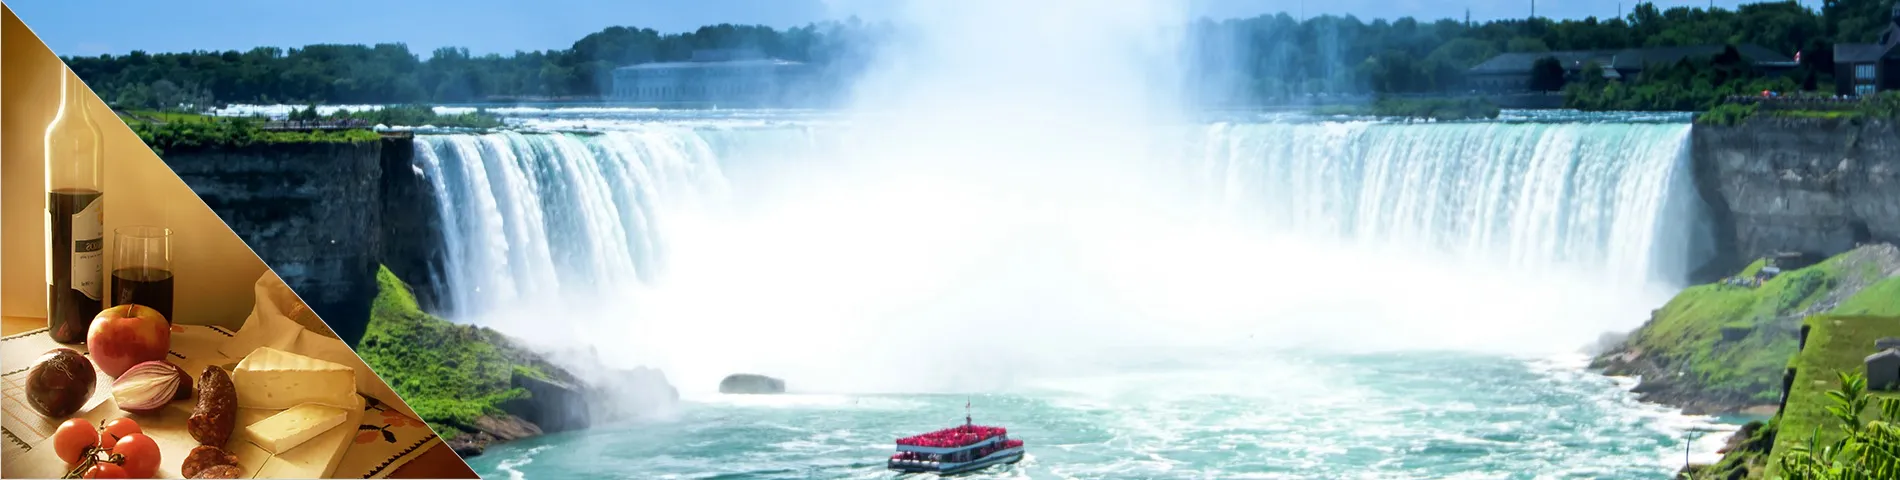 Welland (Niagaran putoukset) - 